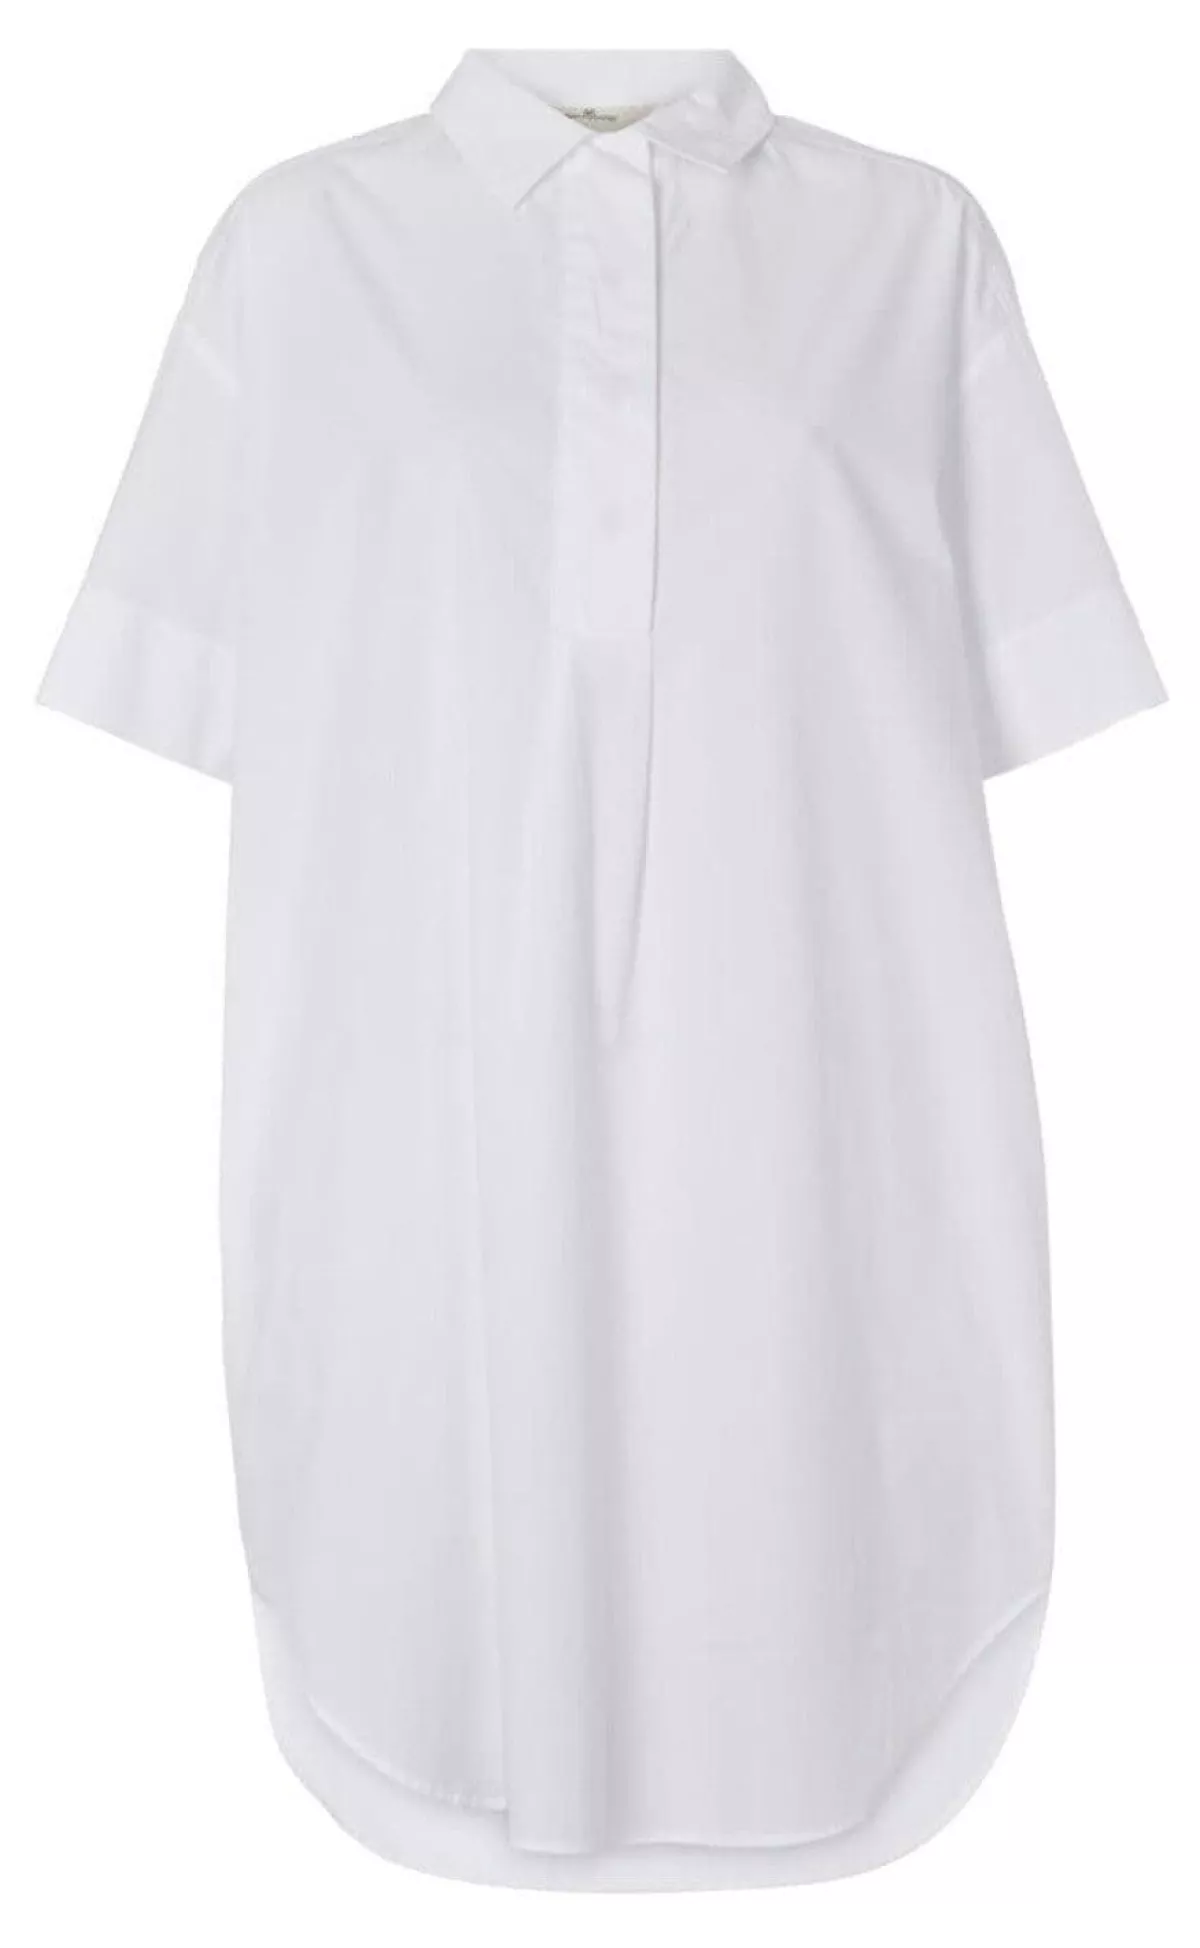 #1 - Basic Apparel Skjortekjole - Vilde Tunique - Bright White